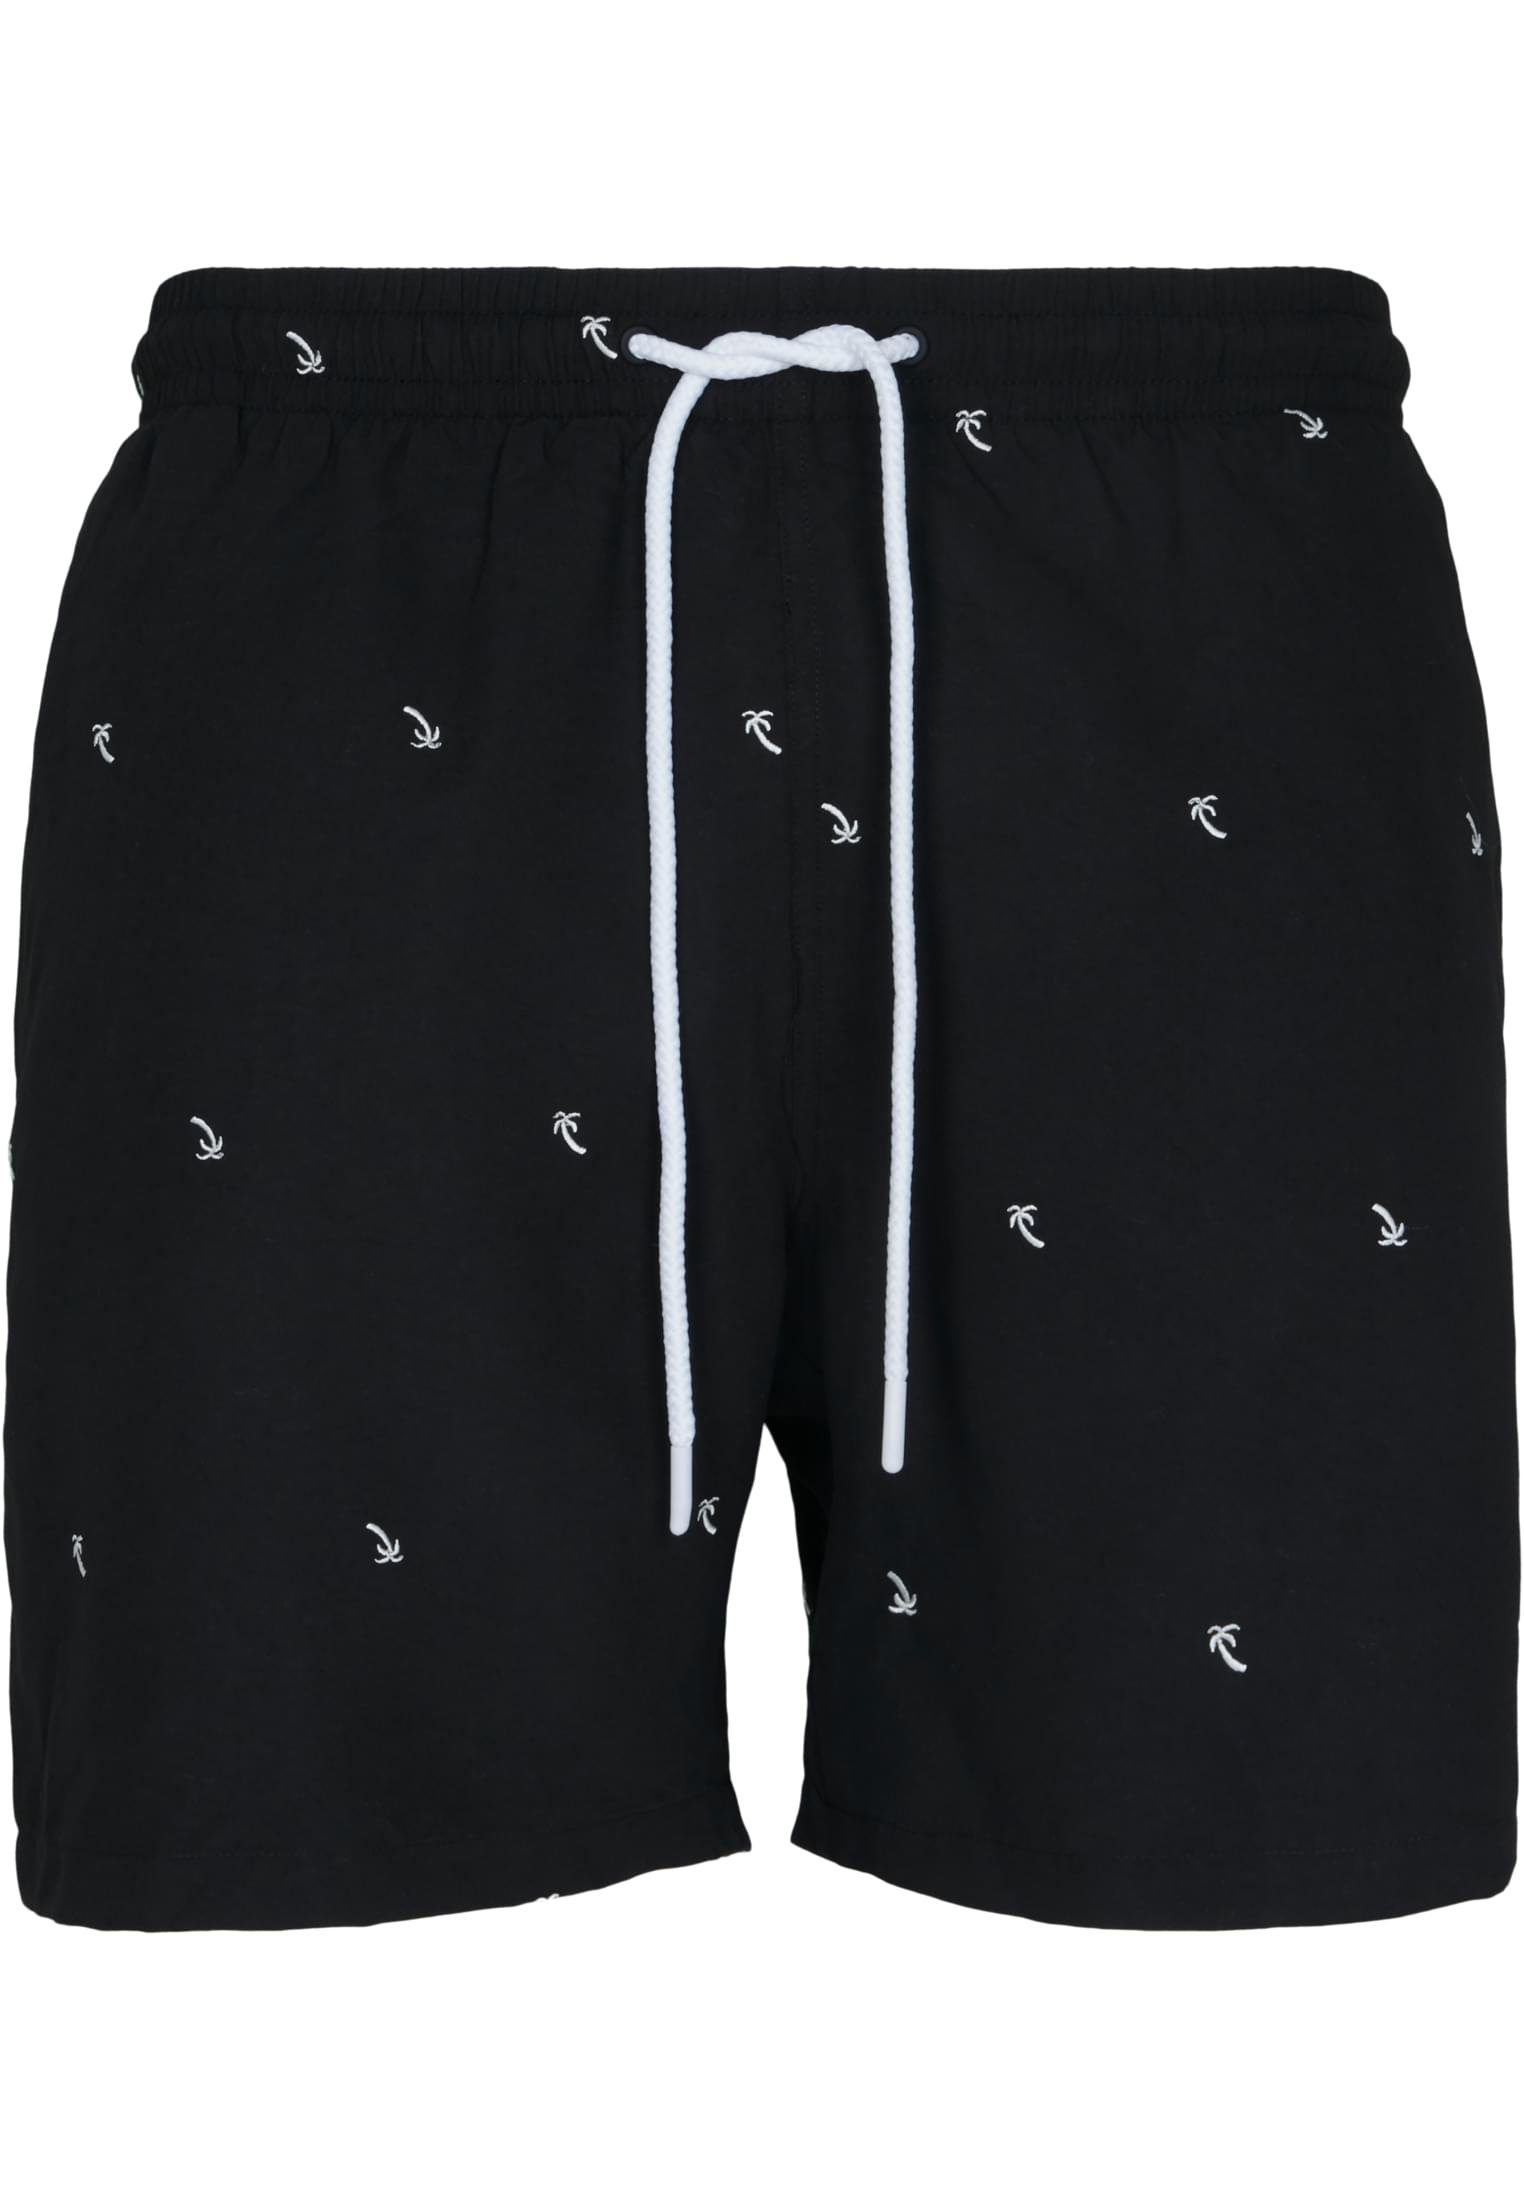 URBAN CLASSICS Badeshorts Herren Embroidery Swim Shorts black/palmtree